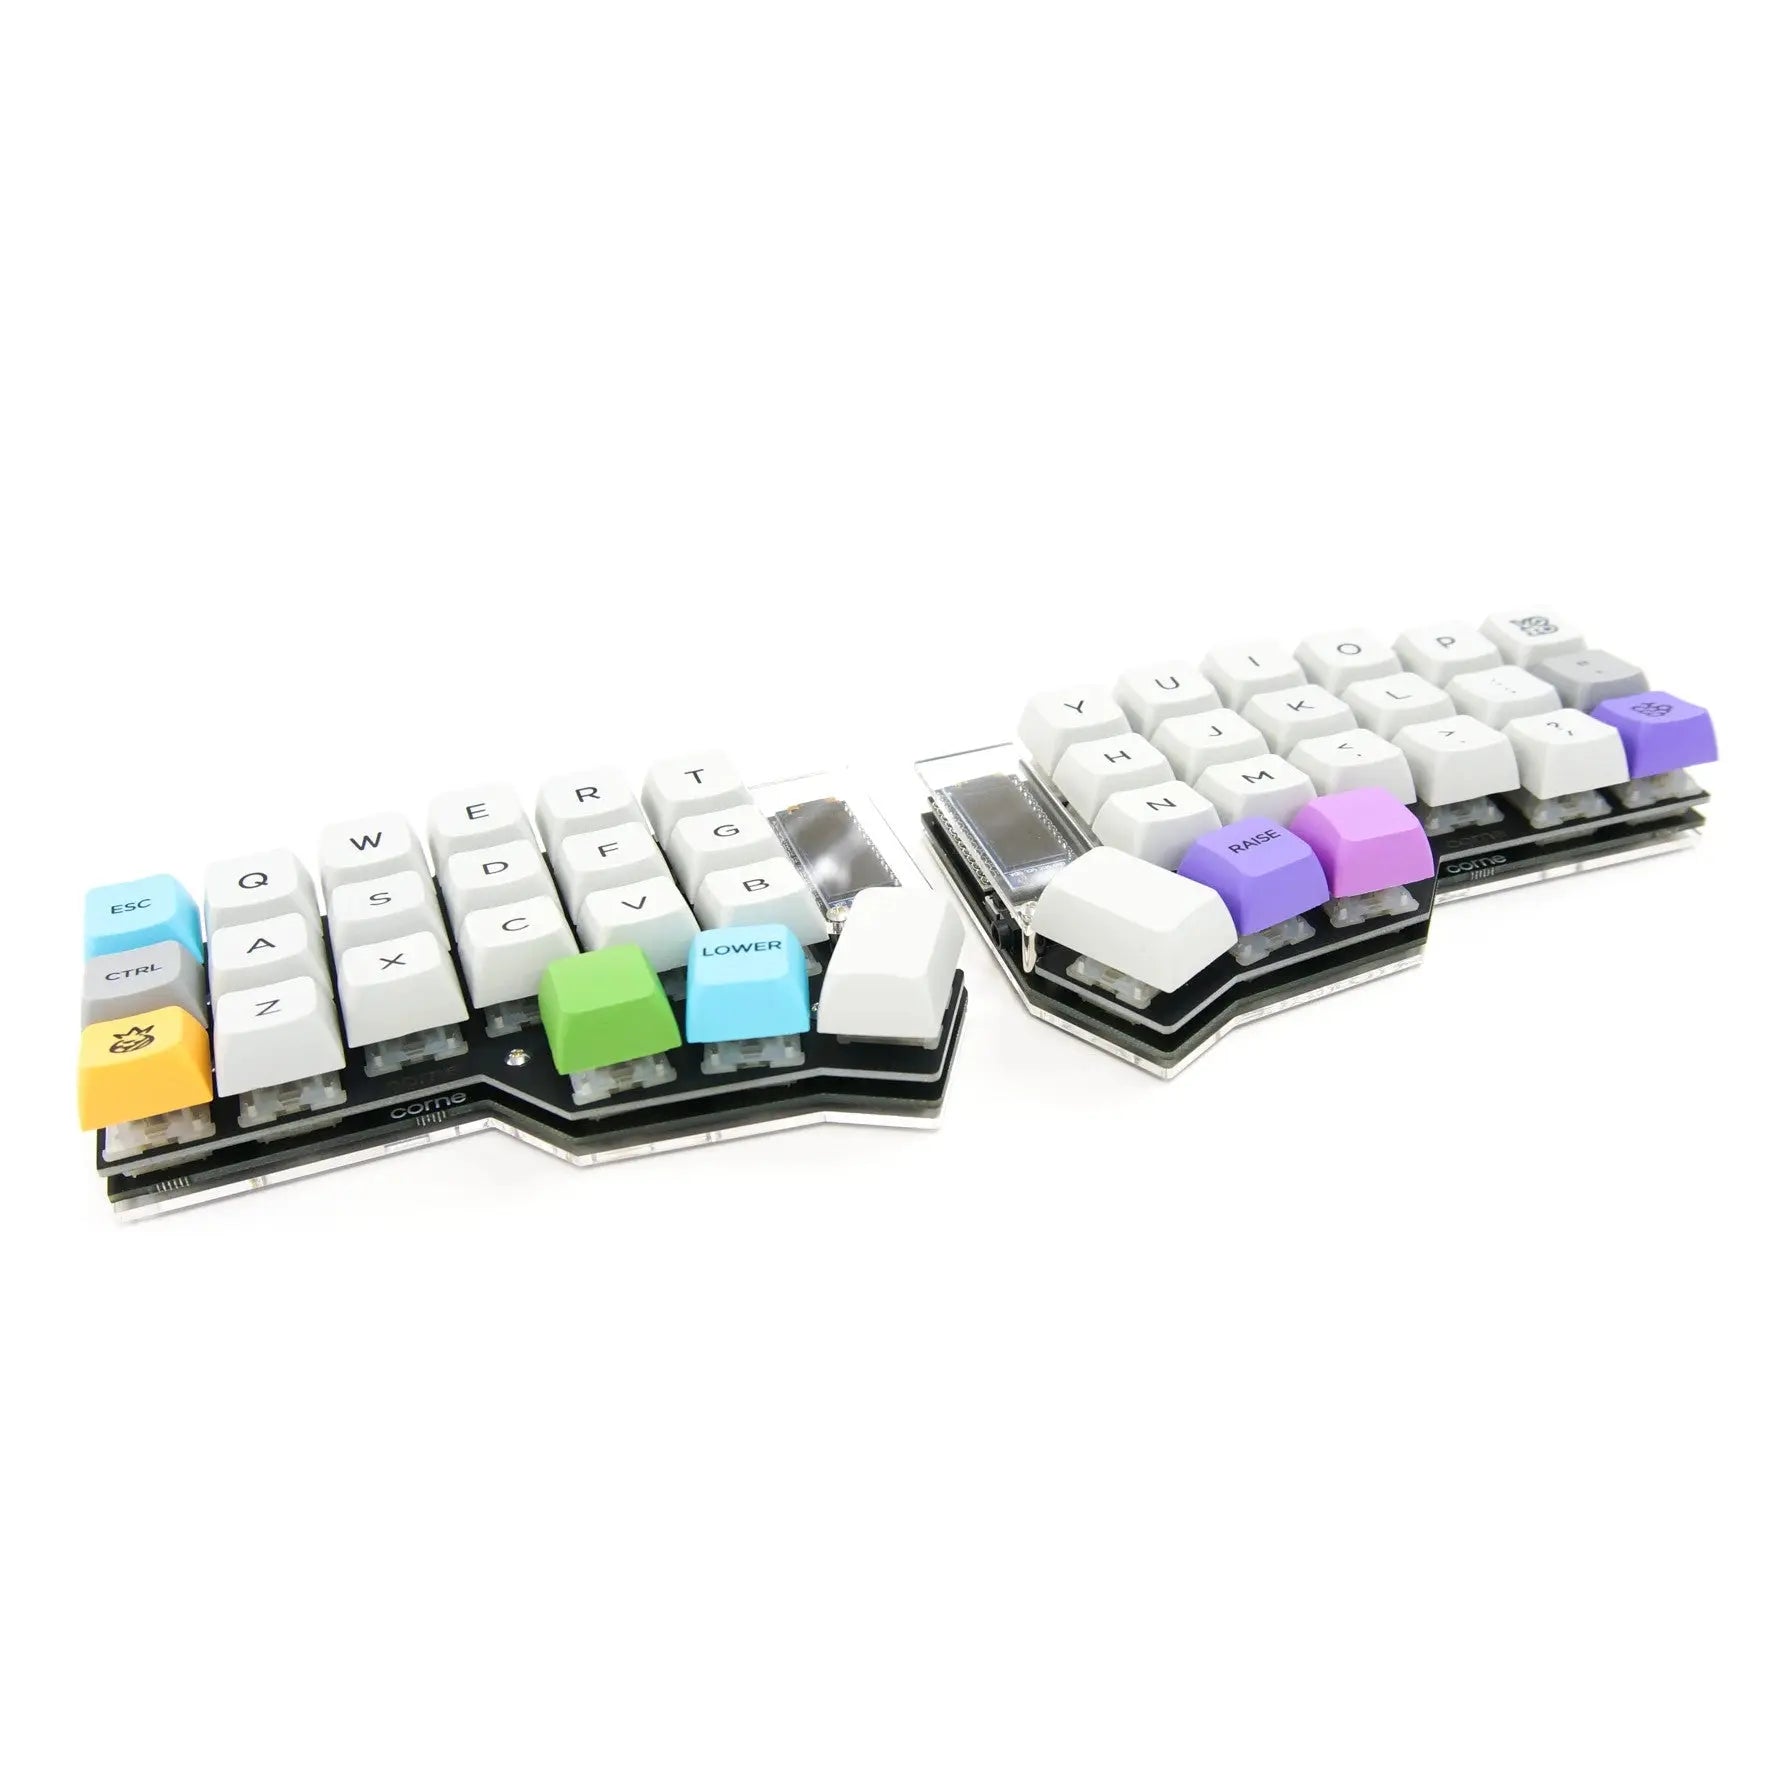 Corne Cherry v3 RGB Keyboard Kit – KEEBD